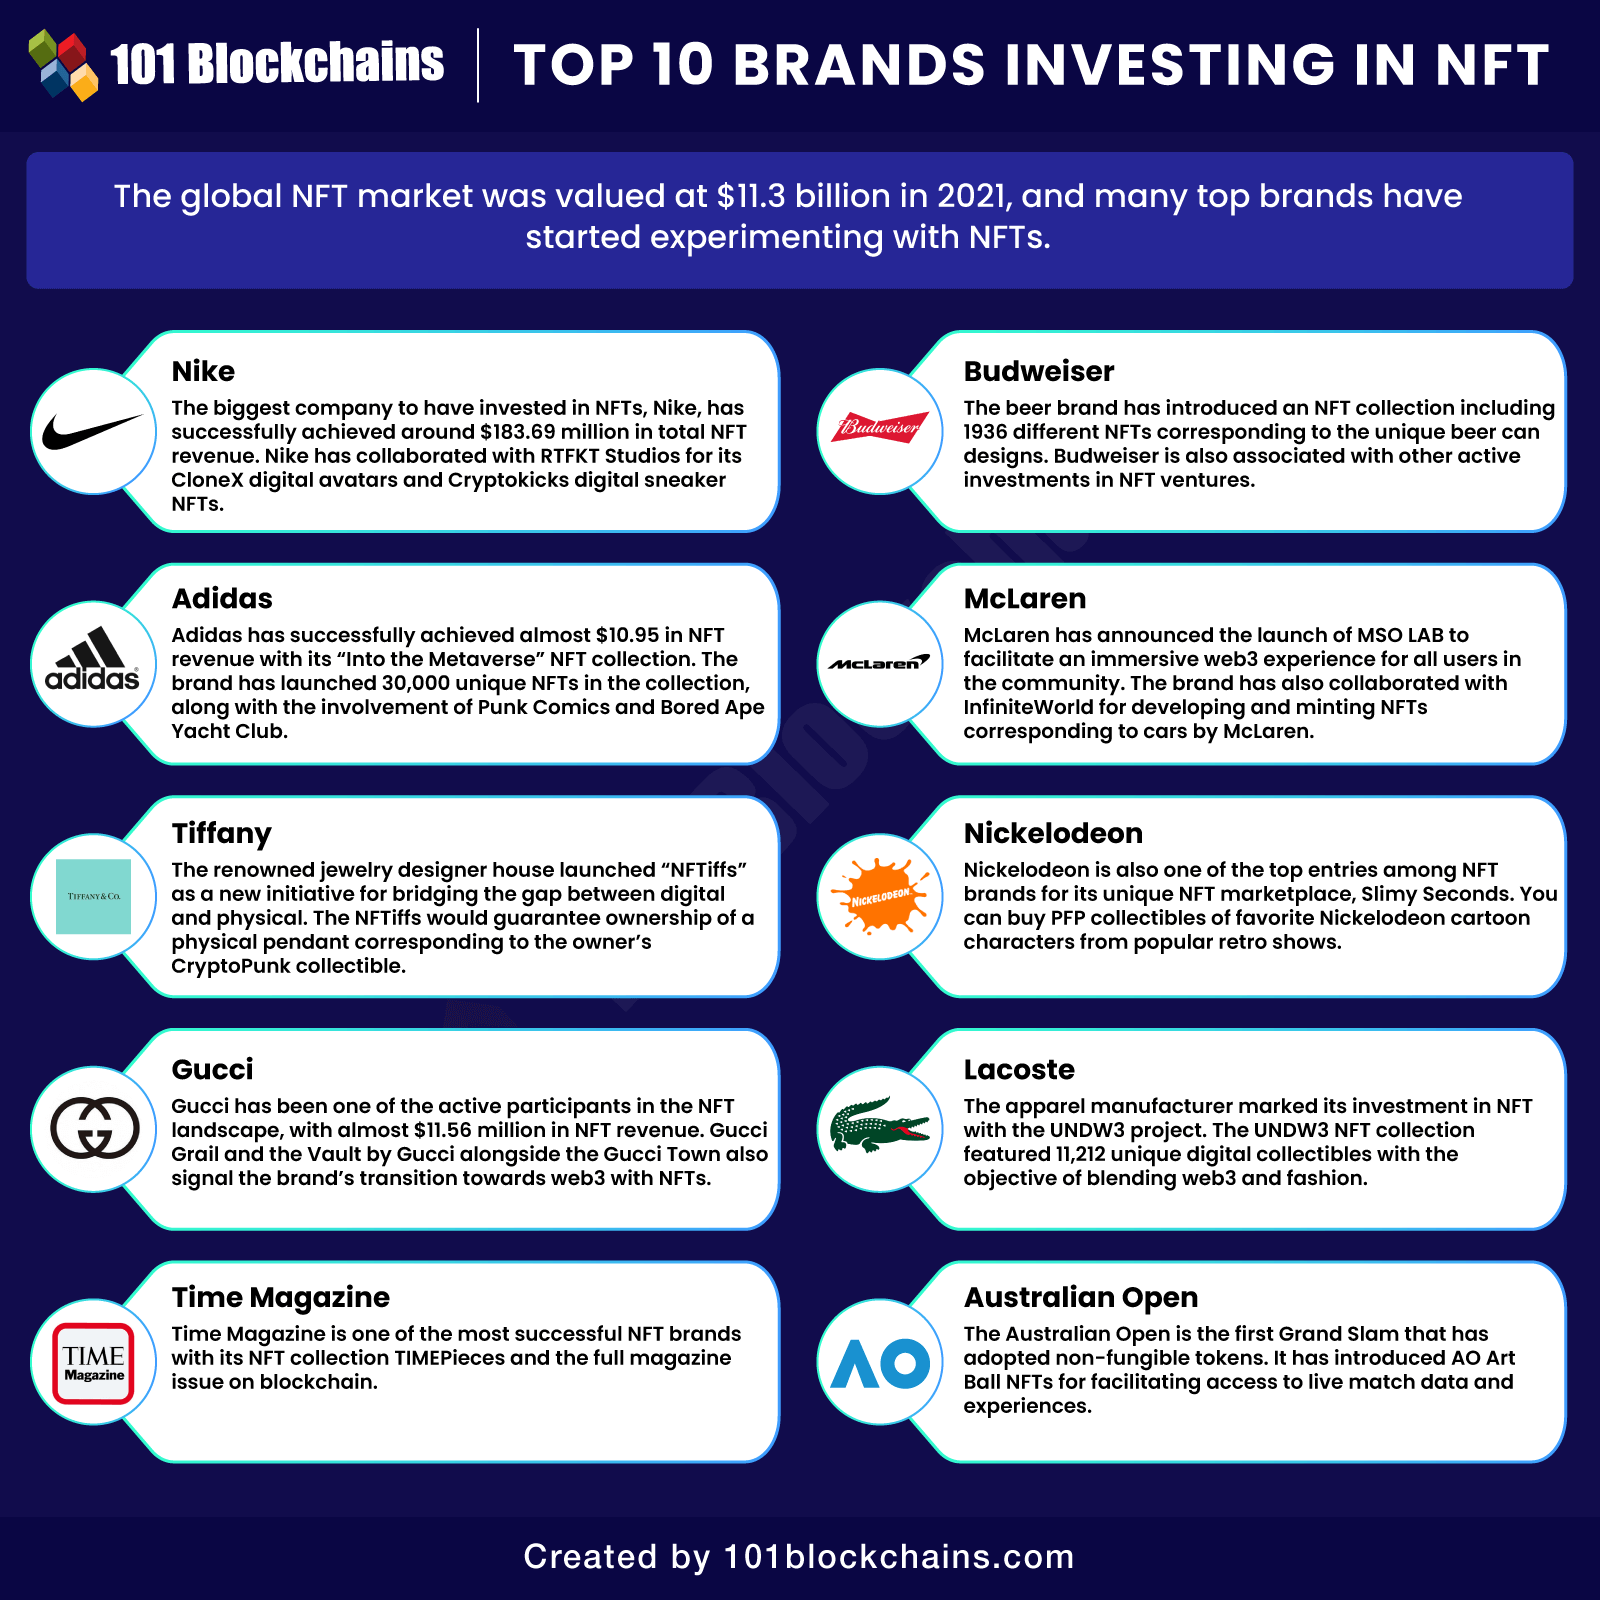 brands investing in NFT